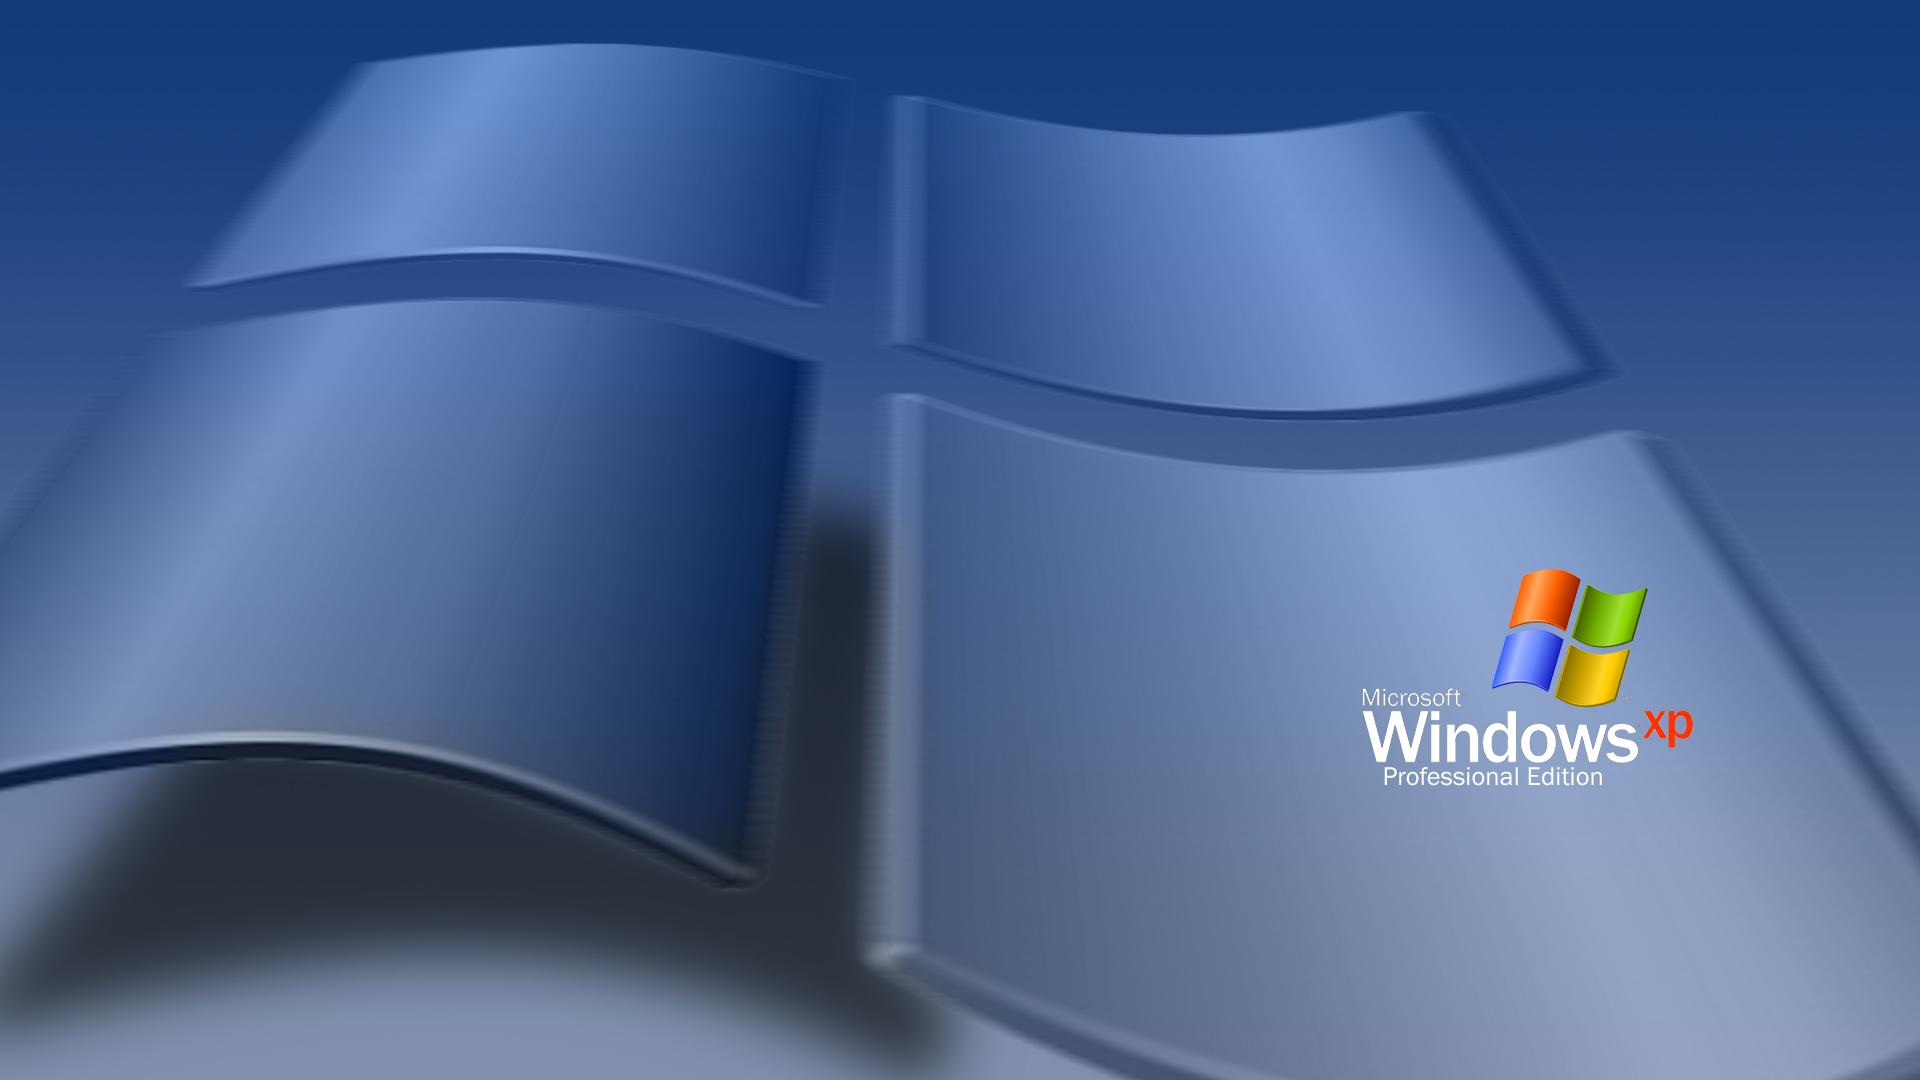 Windows Xp Professional wallpaper 234145